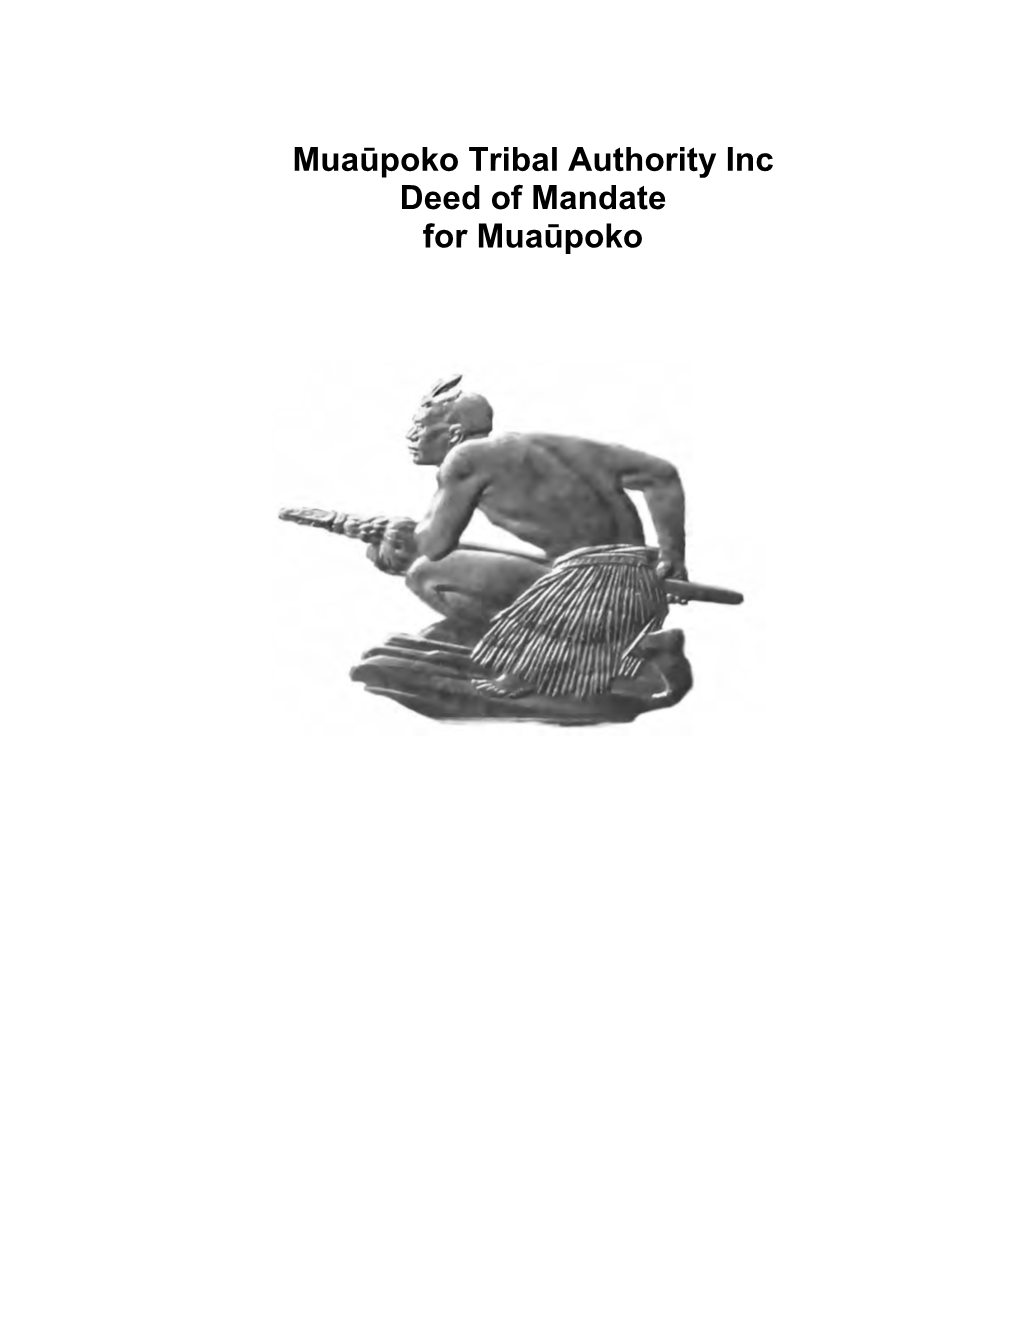 Muaūpoko Tribal Authority Inc Deed of Mandate for Muaūpoko Table of Contents 1